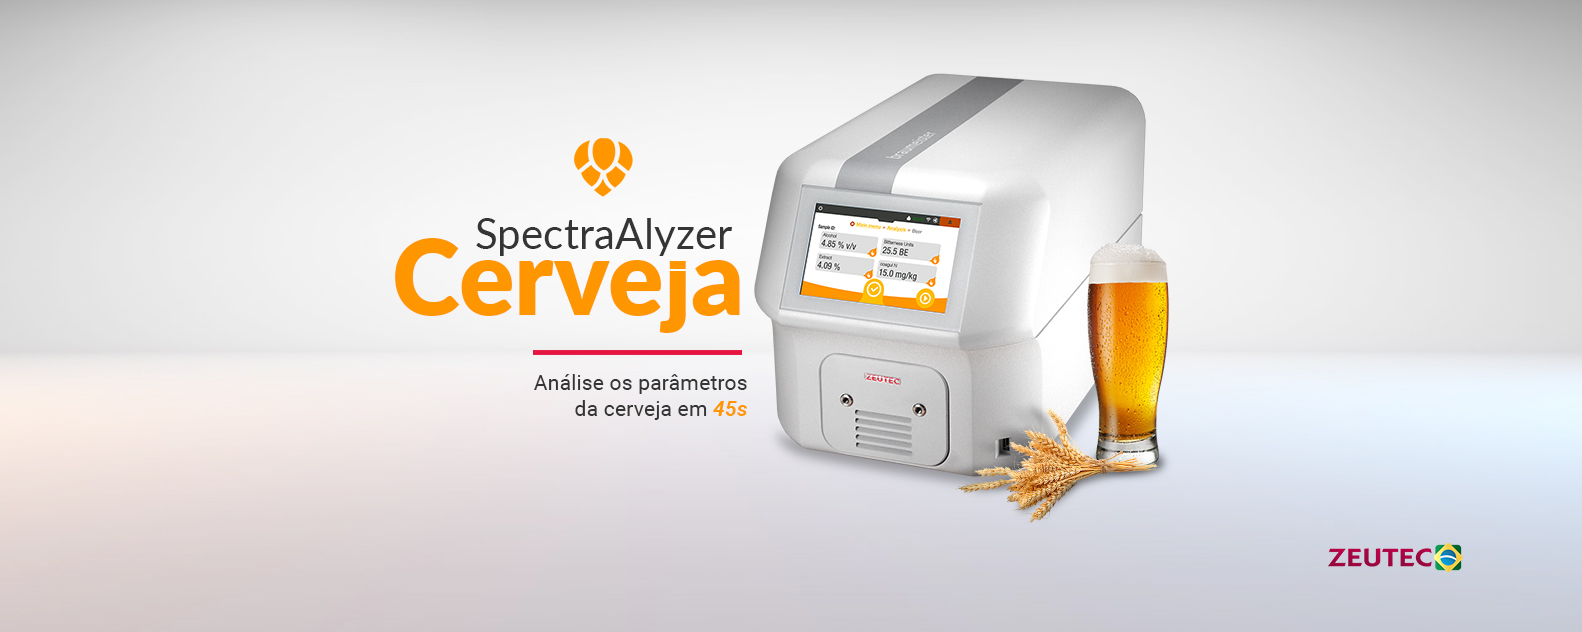 SpectraAlyzer NIR